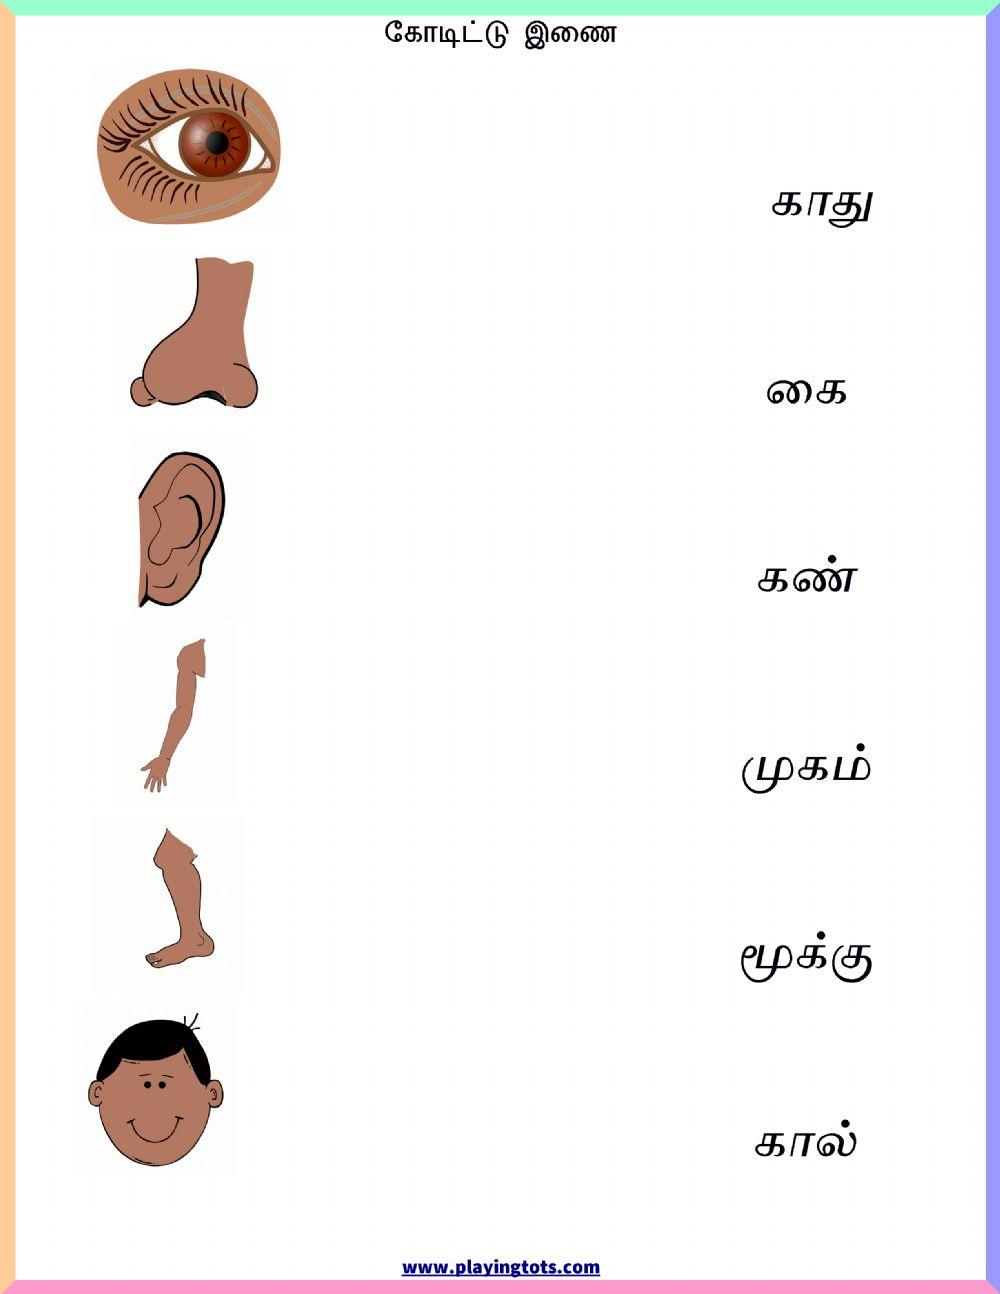 Tamil match